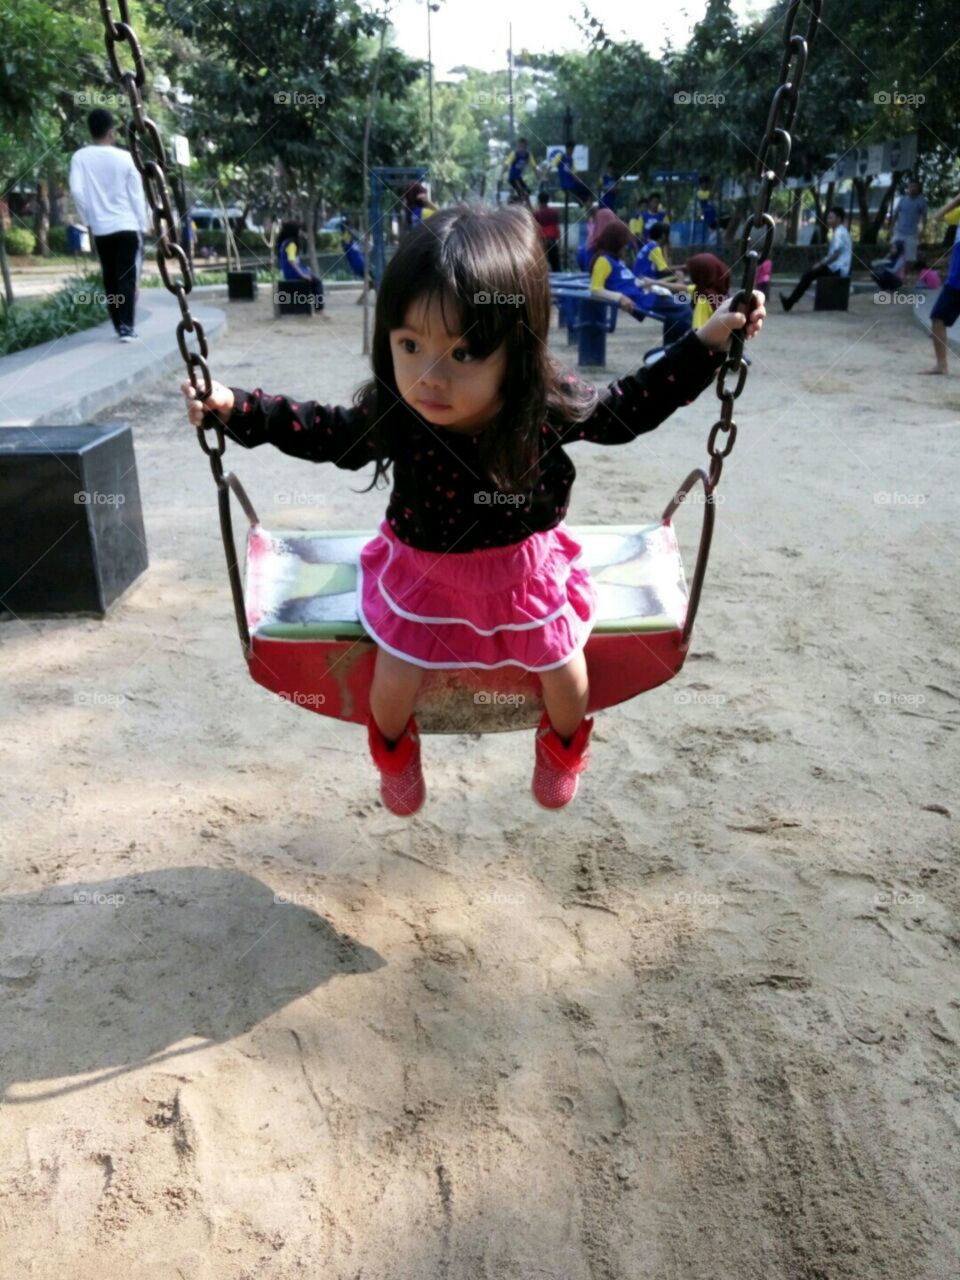 Child, Fun, Girl, People, Playground